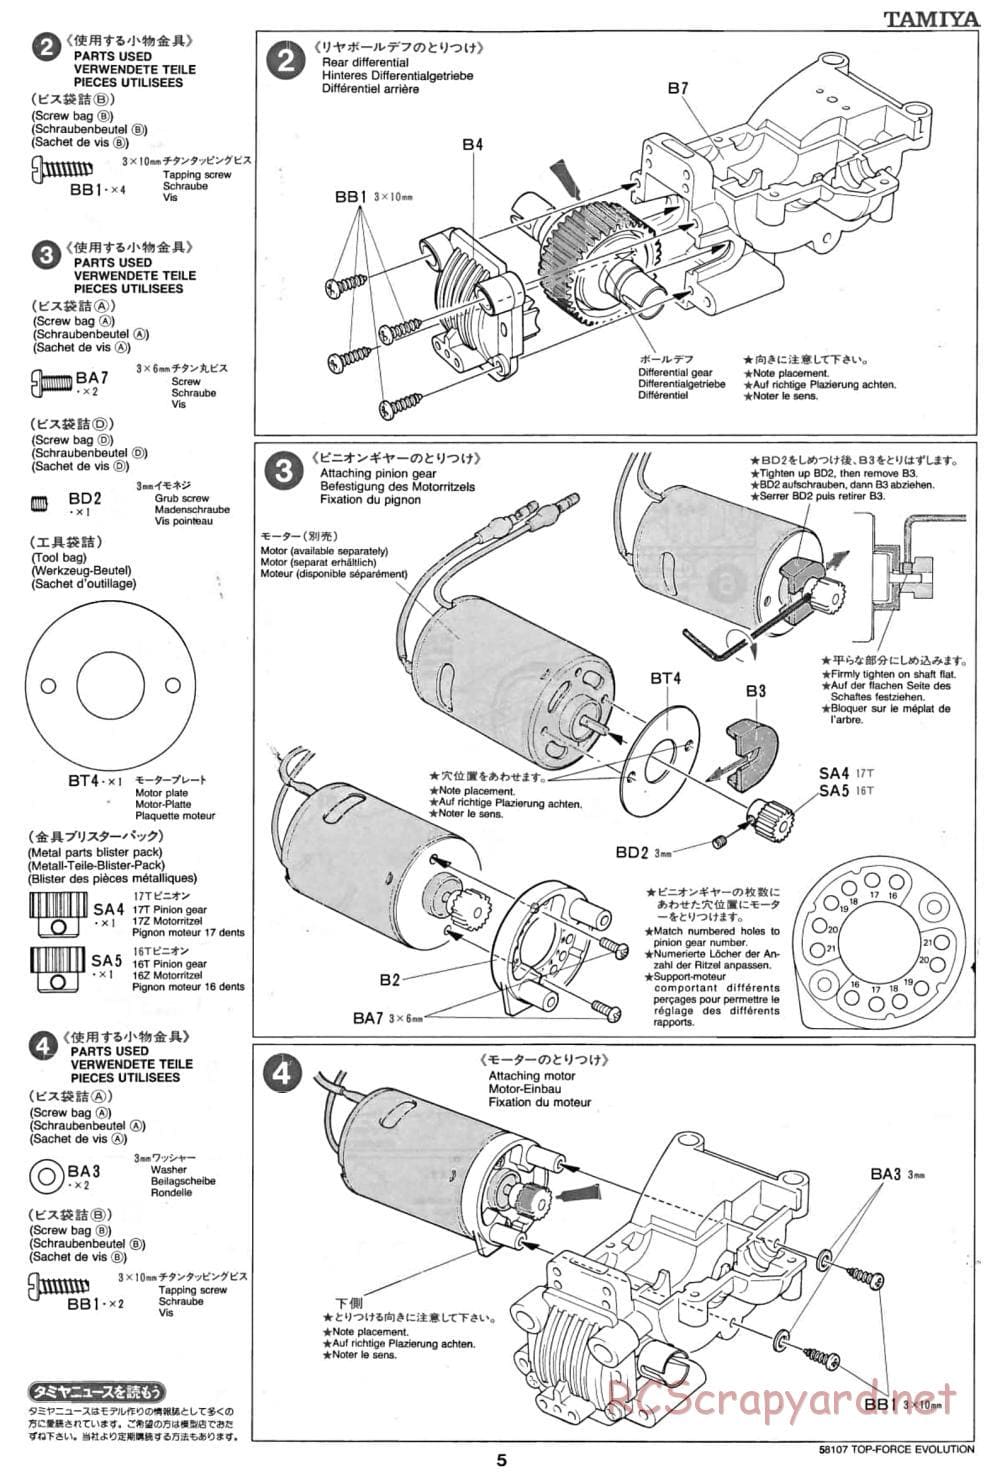 Tamiya - Top Force Evolution Chassis - Manual - Page 5